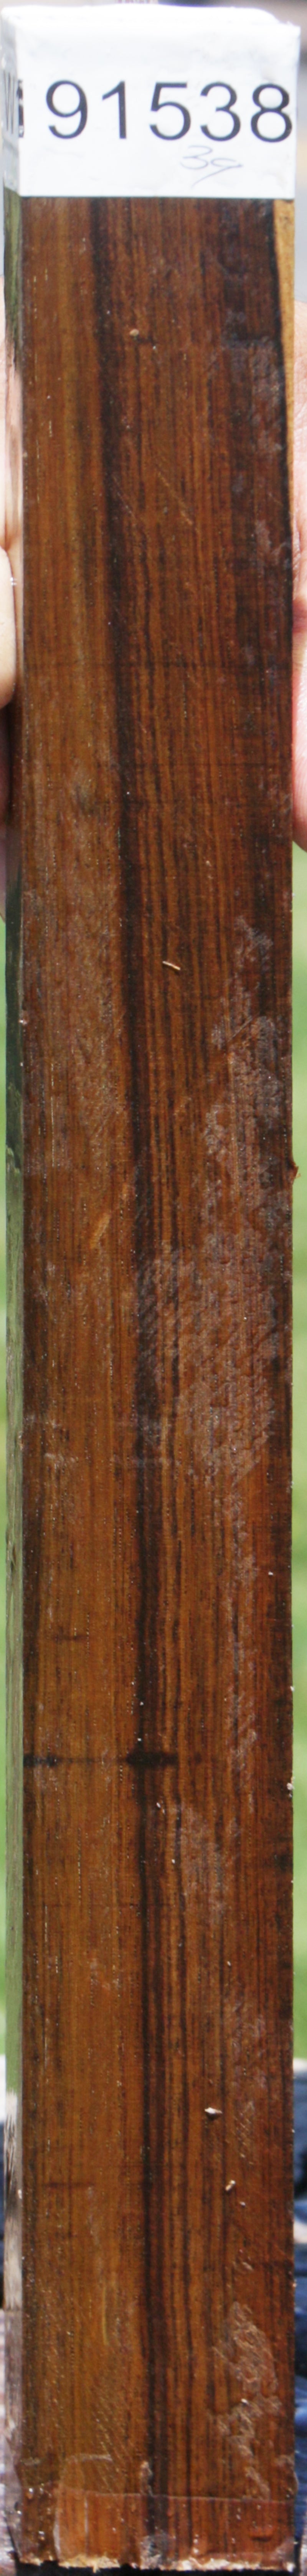 Brazilian Blackheart Lumber